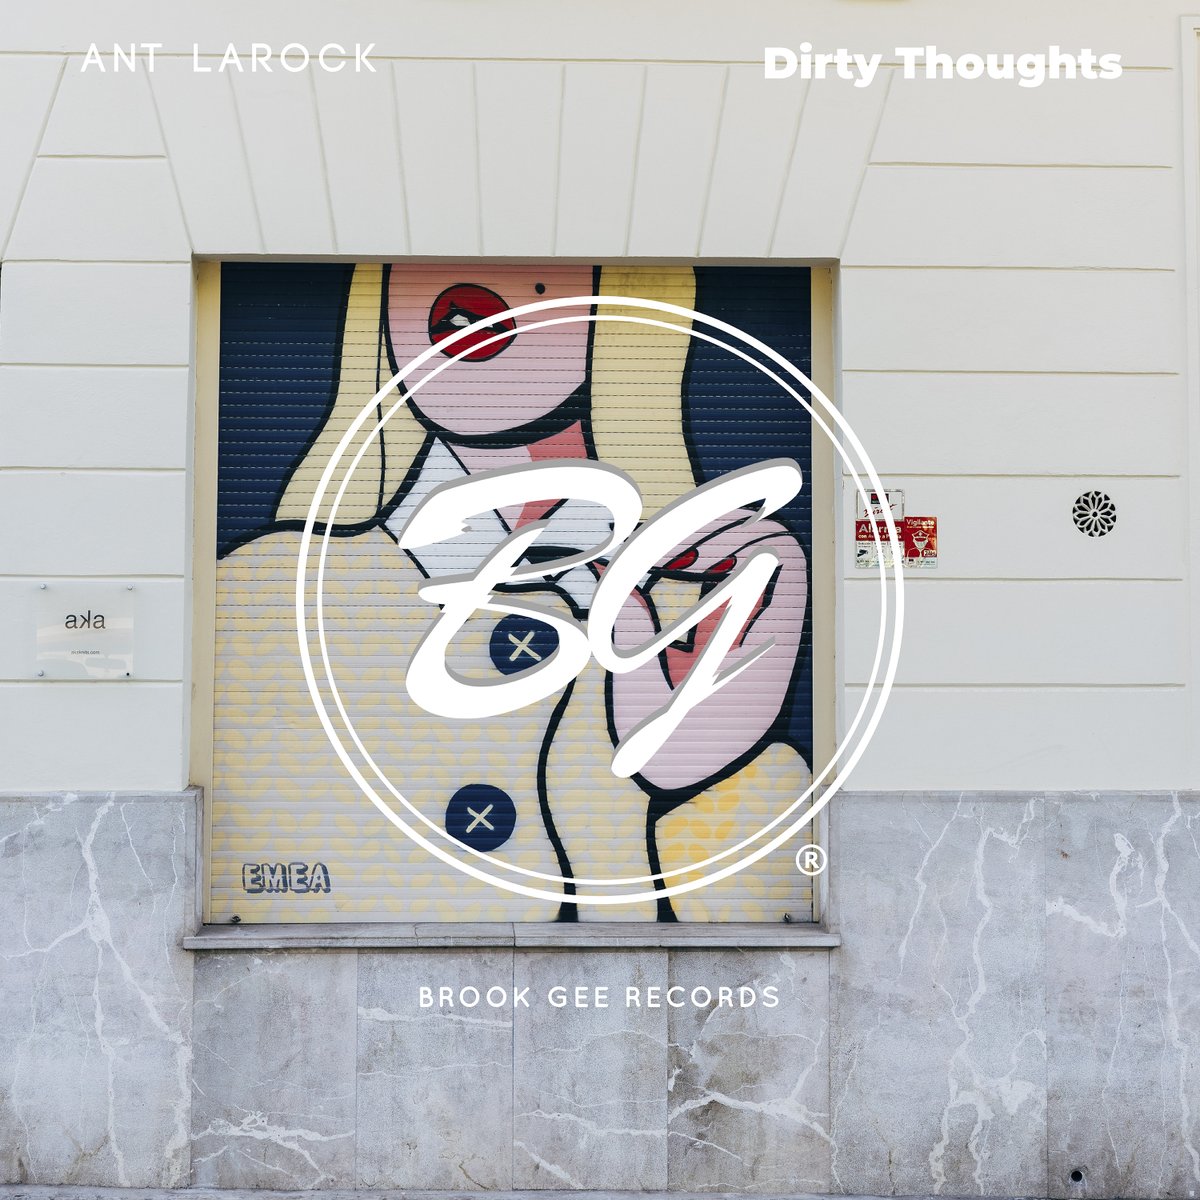 Песни грязные мысли. Dirty thoughts. Dirty thoughts Chloe. Ant Larock. Музыка Dirty thoughts.